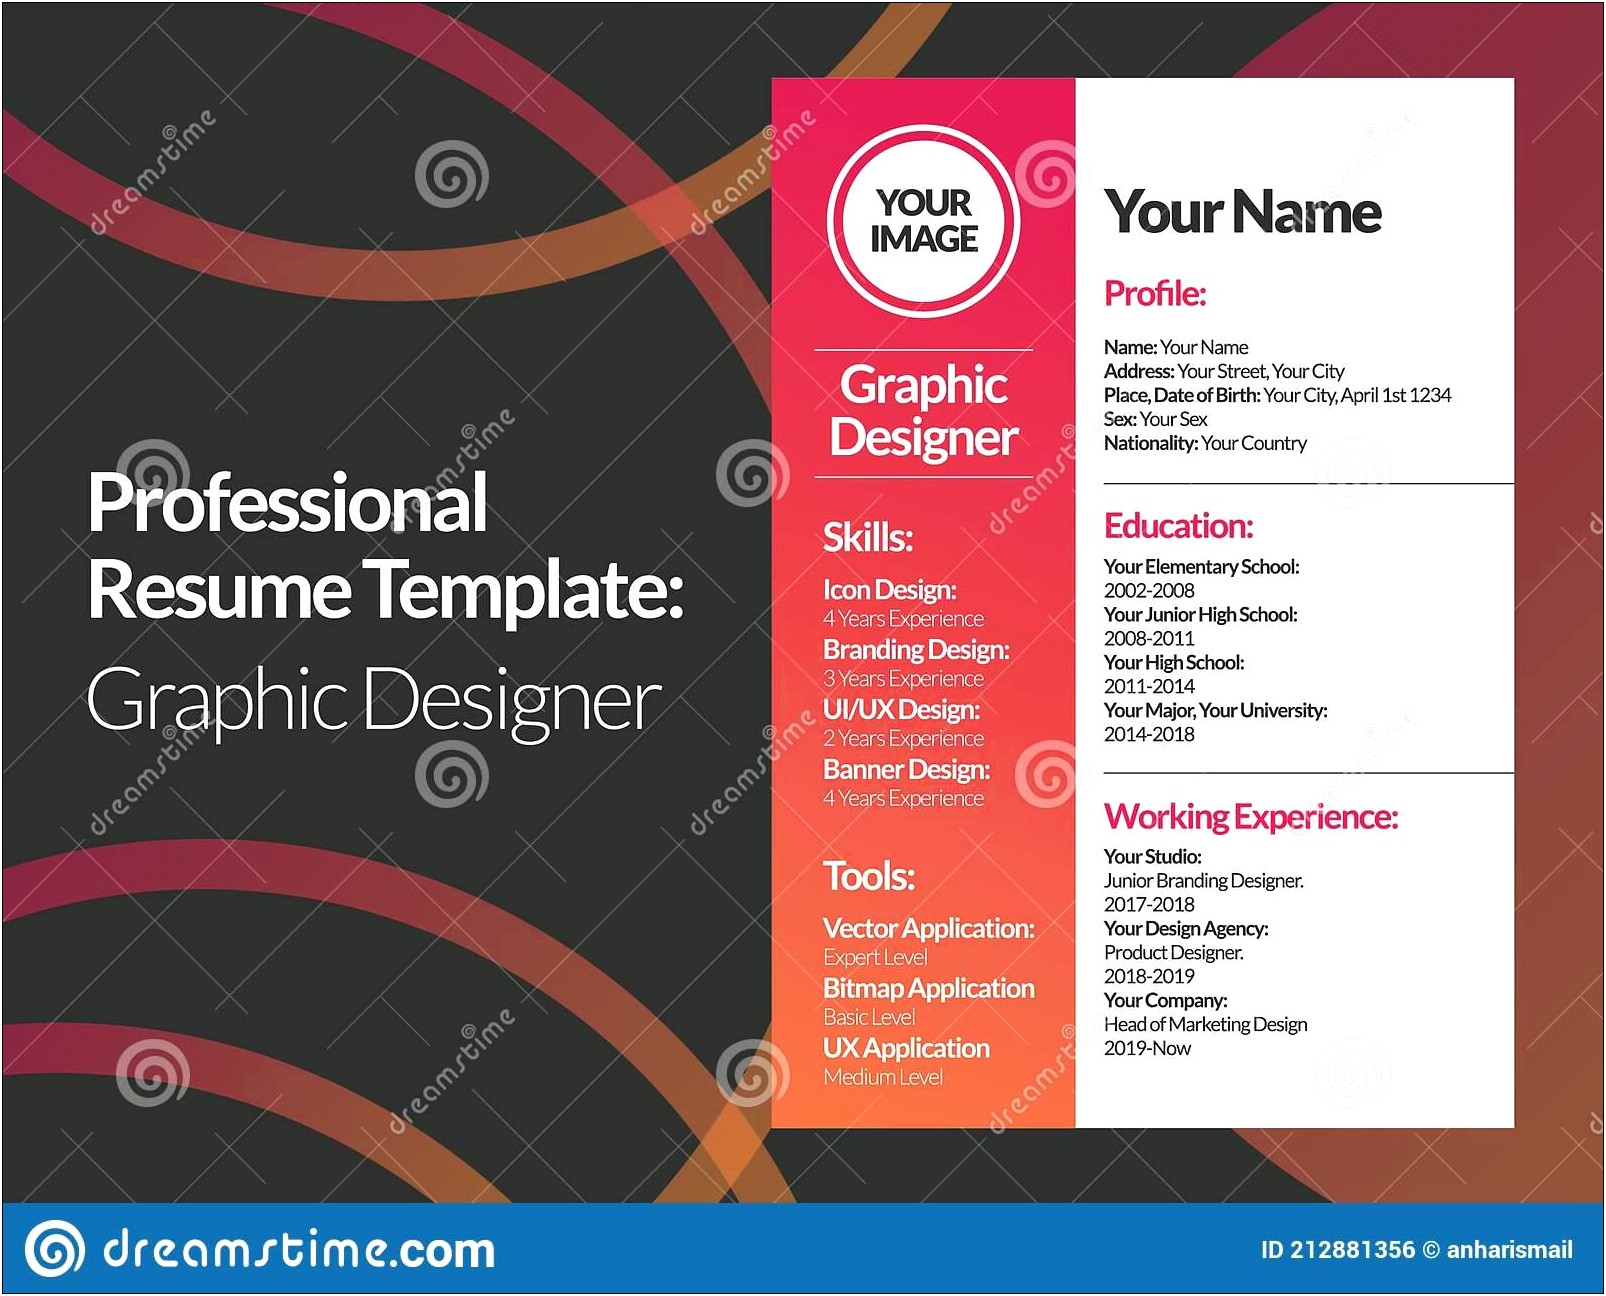 Free Download Graphic Design Resume